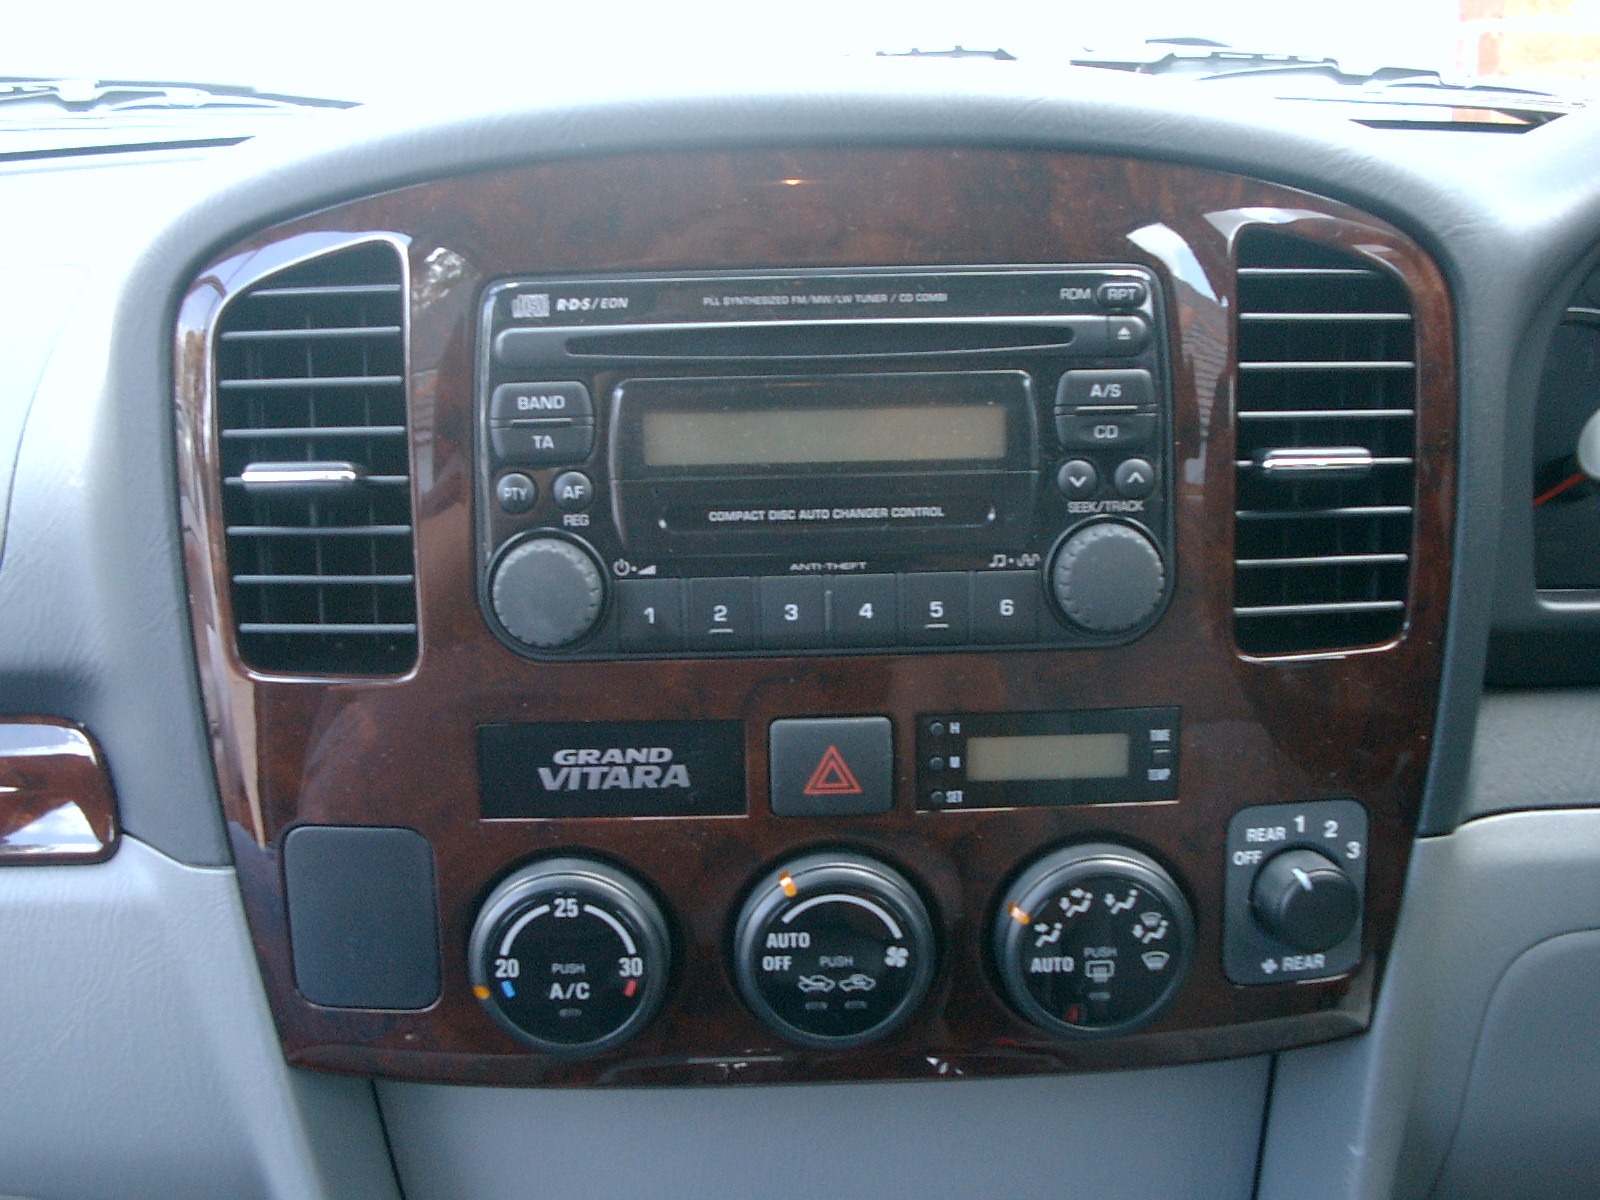 Suzuki Grand Vitara (9905) Stereo Removal James Simpson